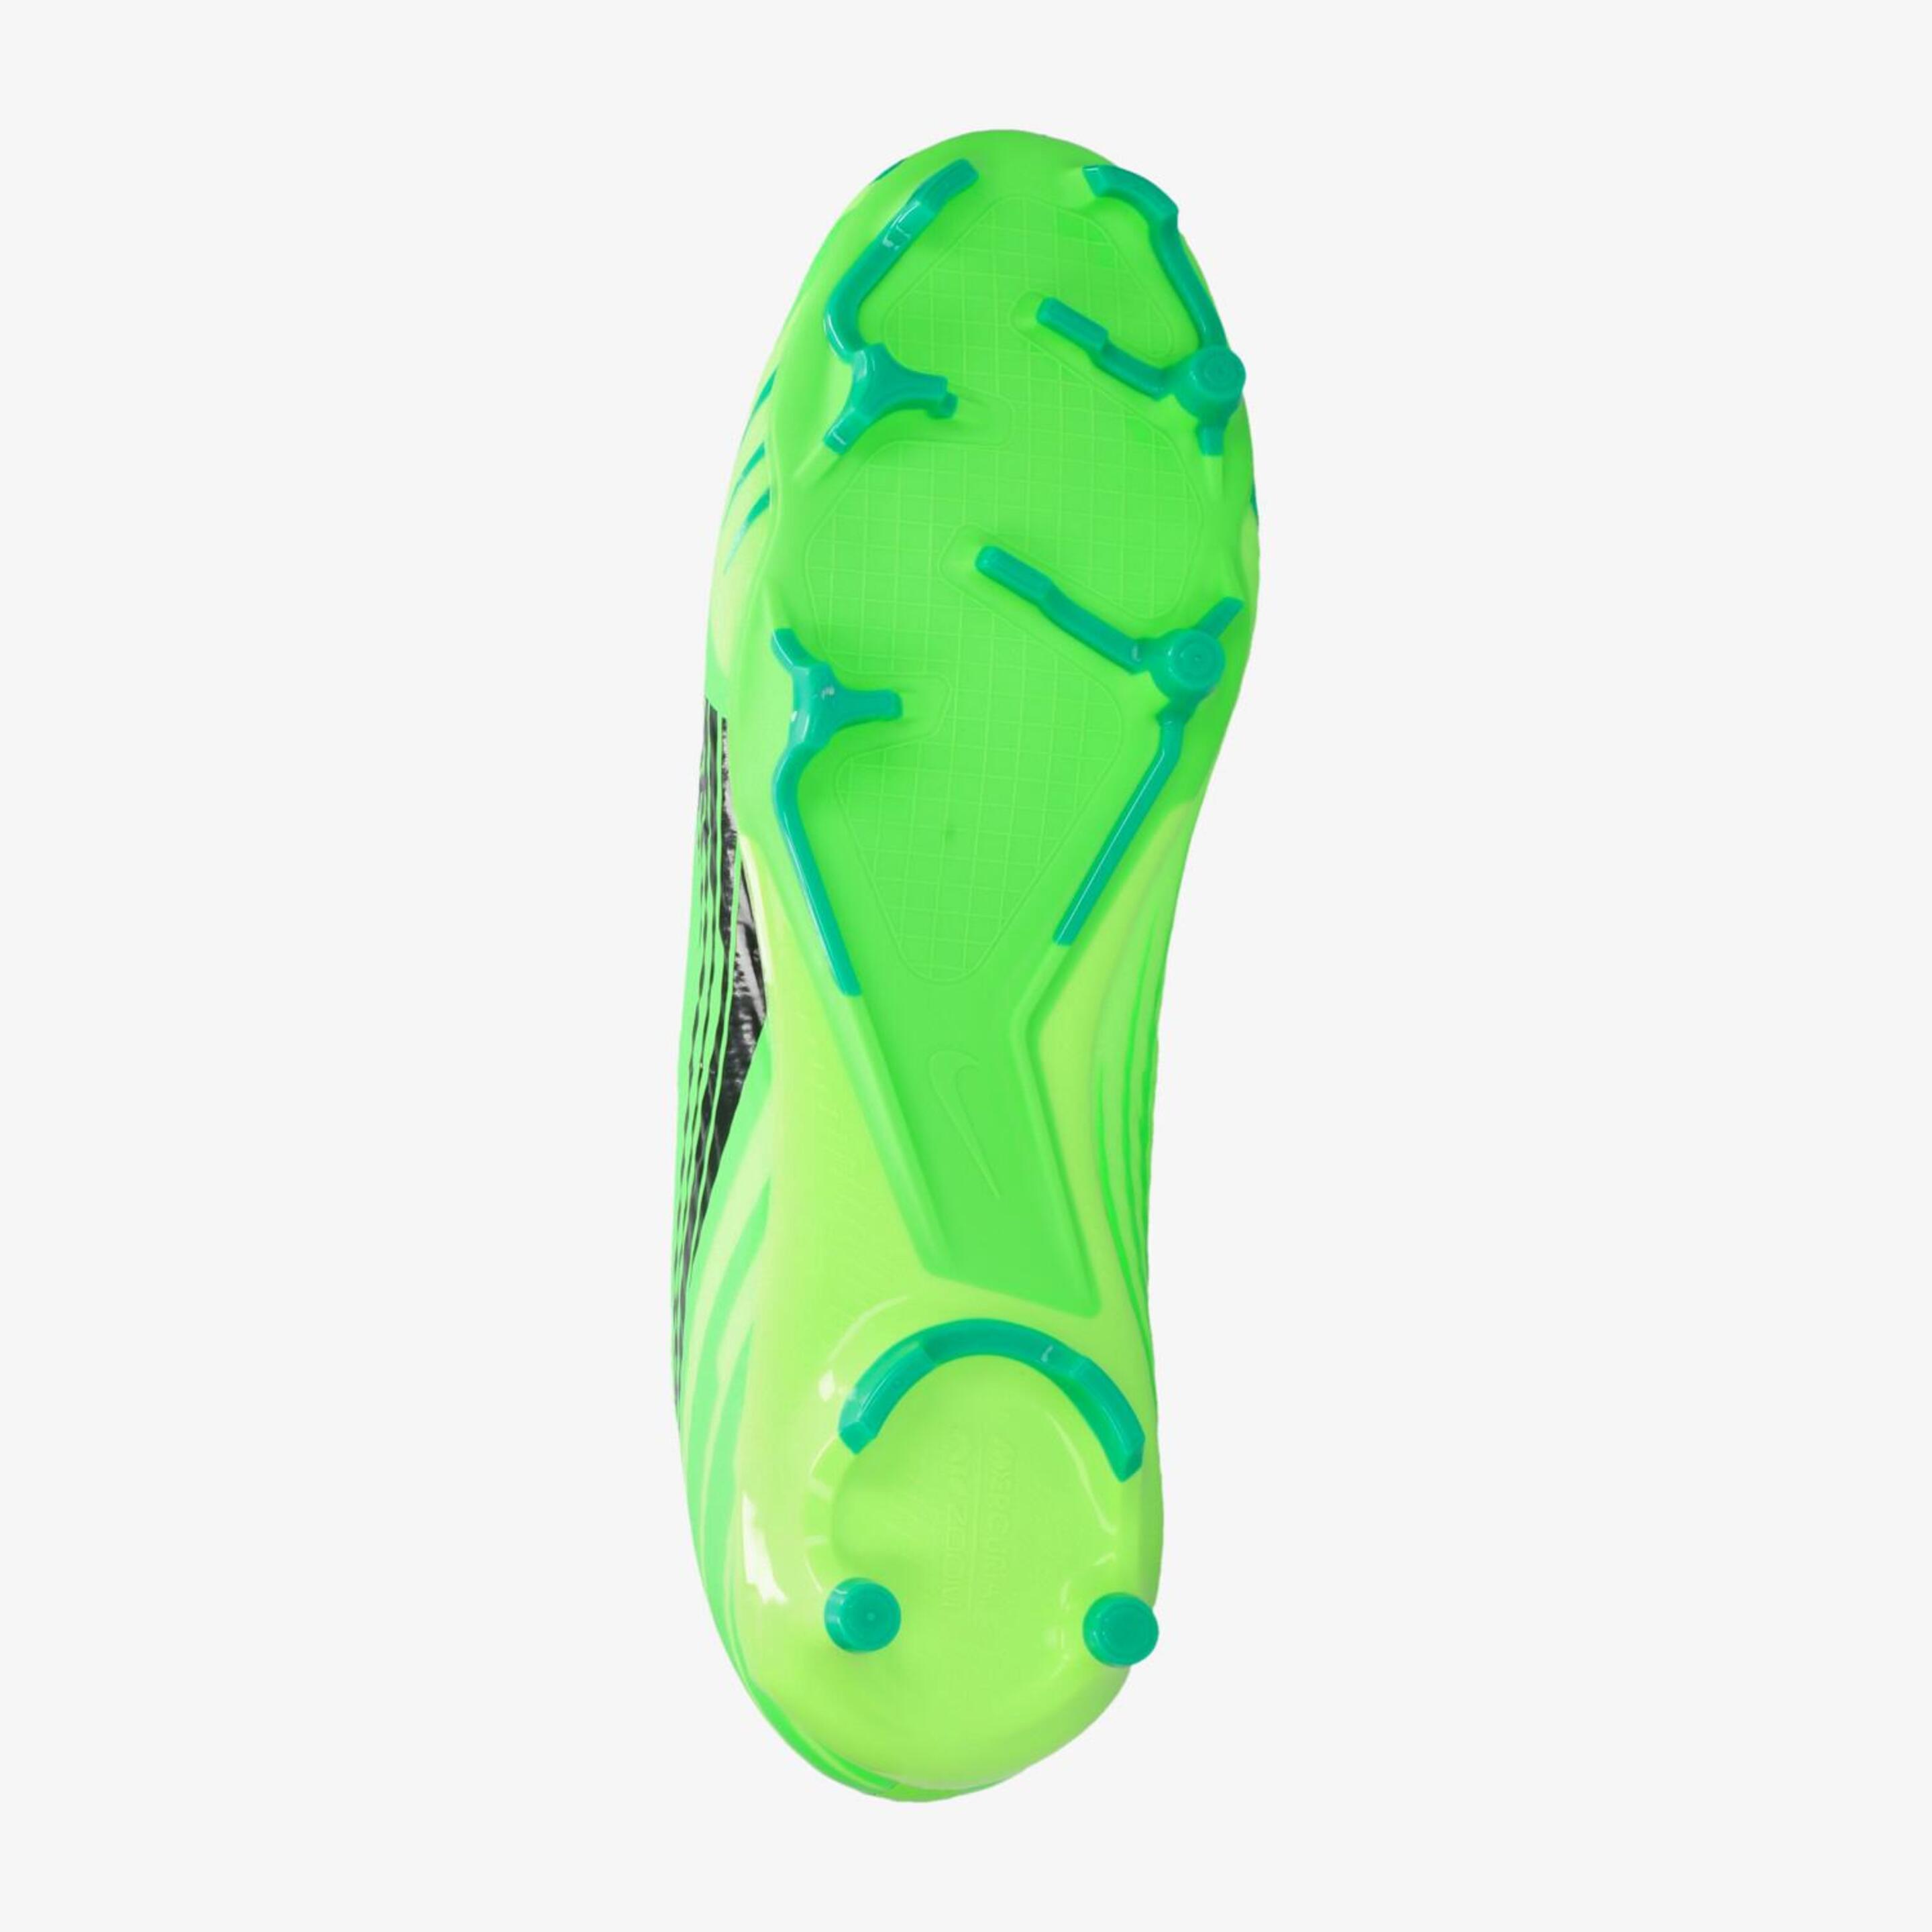 Nike Zoom Superfly Fg CR7 - Verde - Botas Fútbol Tacos